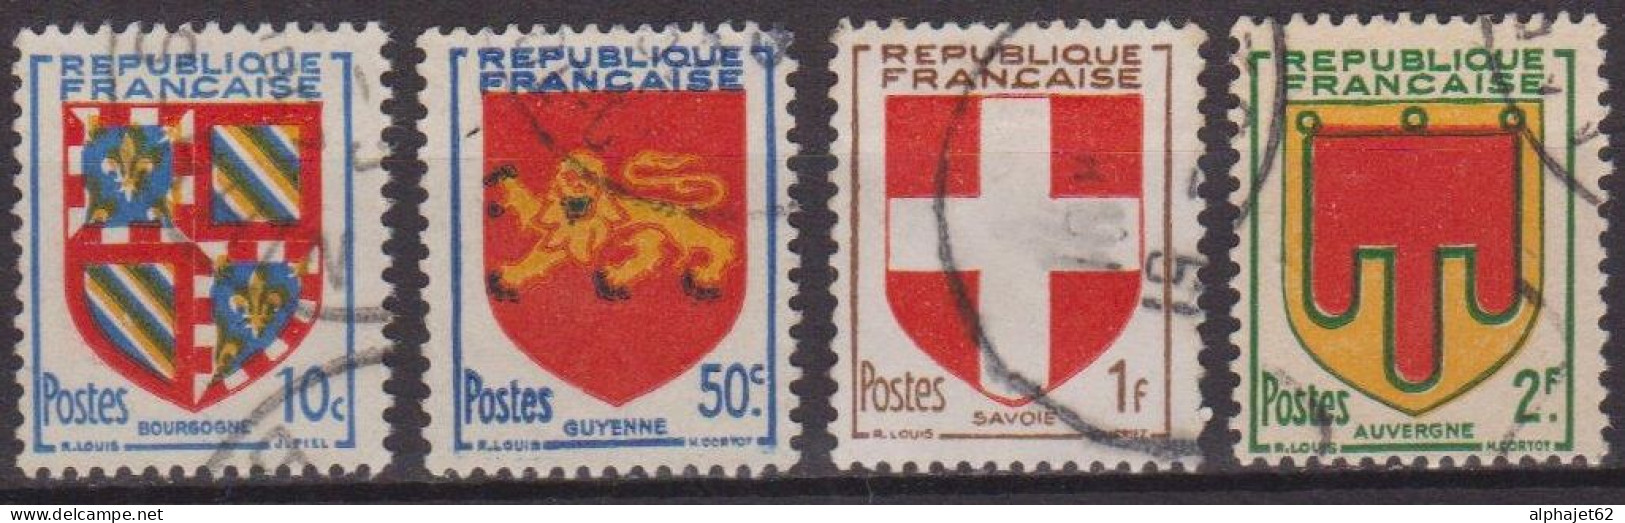 Blasons Des Provinces - FRANCE - Bourgogne, Guyenne, Savoie, Auvergne - N° 834-835-836-837 - 1949 - Used Stamps